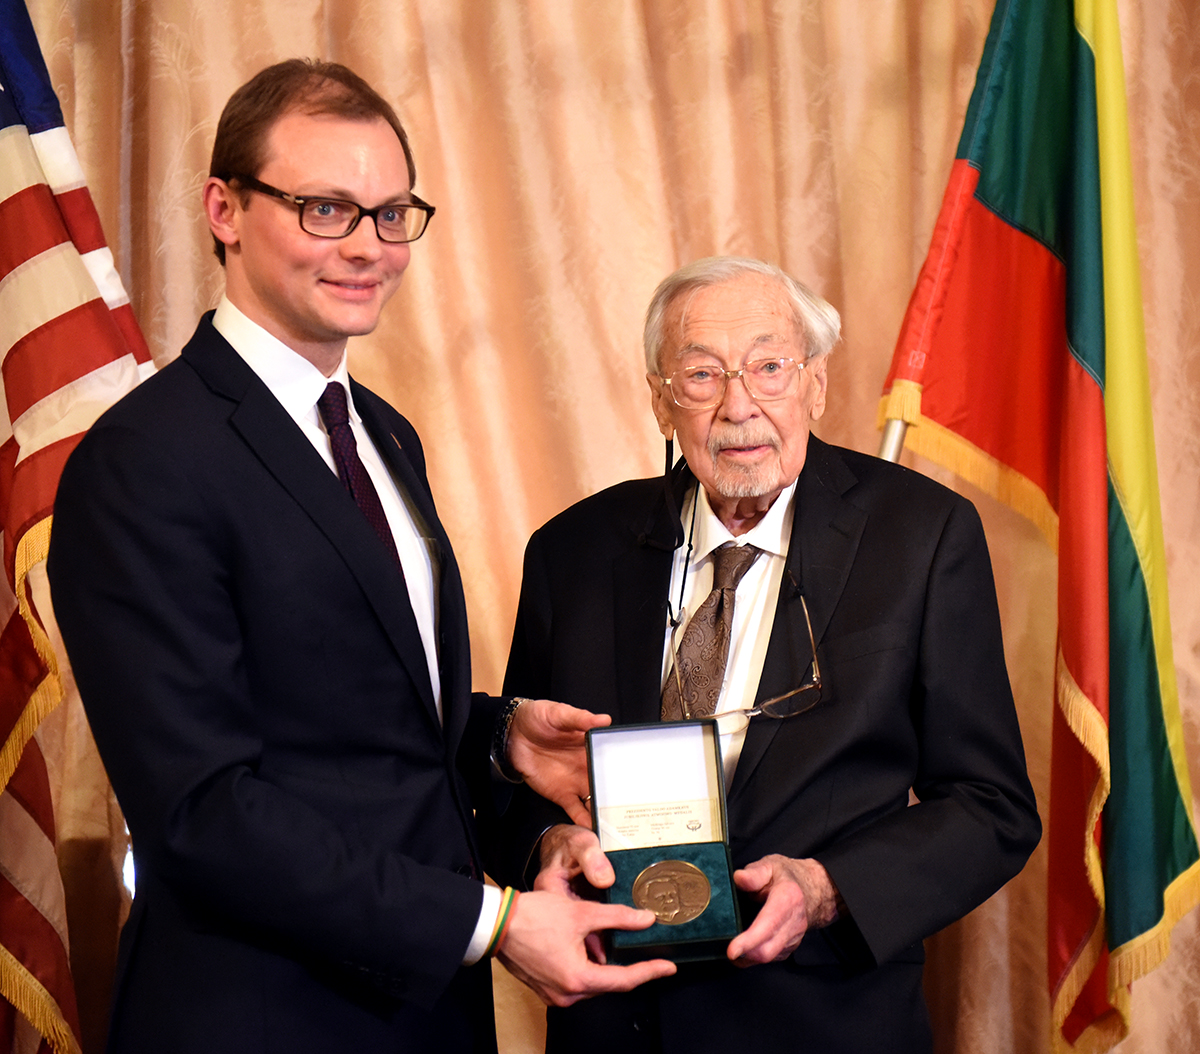 M. Bekešius perdavė S. Balzekui Jr. Lietuvos prezidento Valdo Adamkaus dovaną muziejui – medalį, kuris praturtins jo fondus.